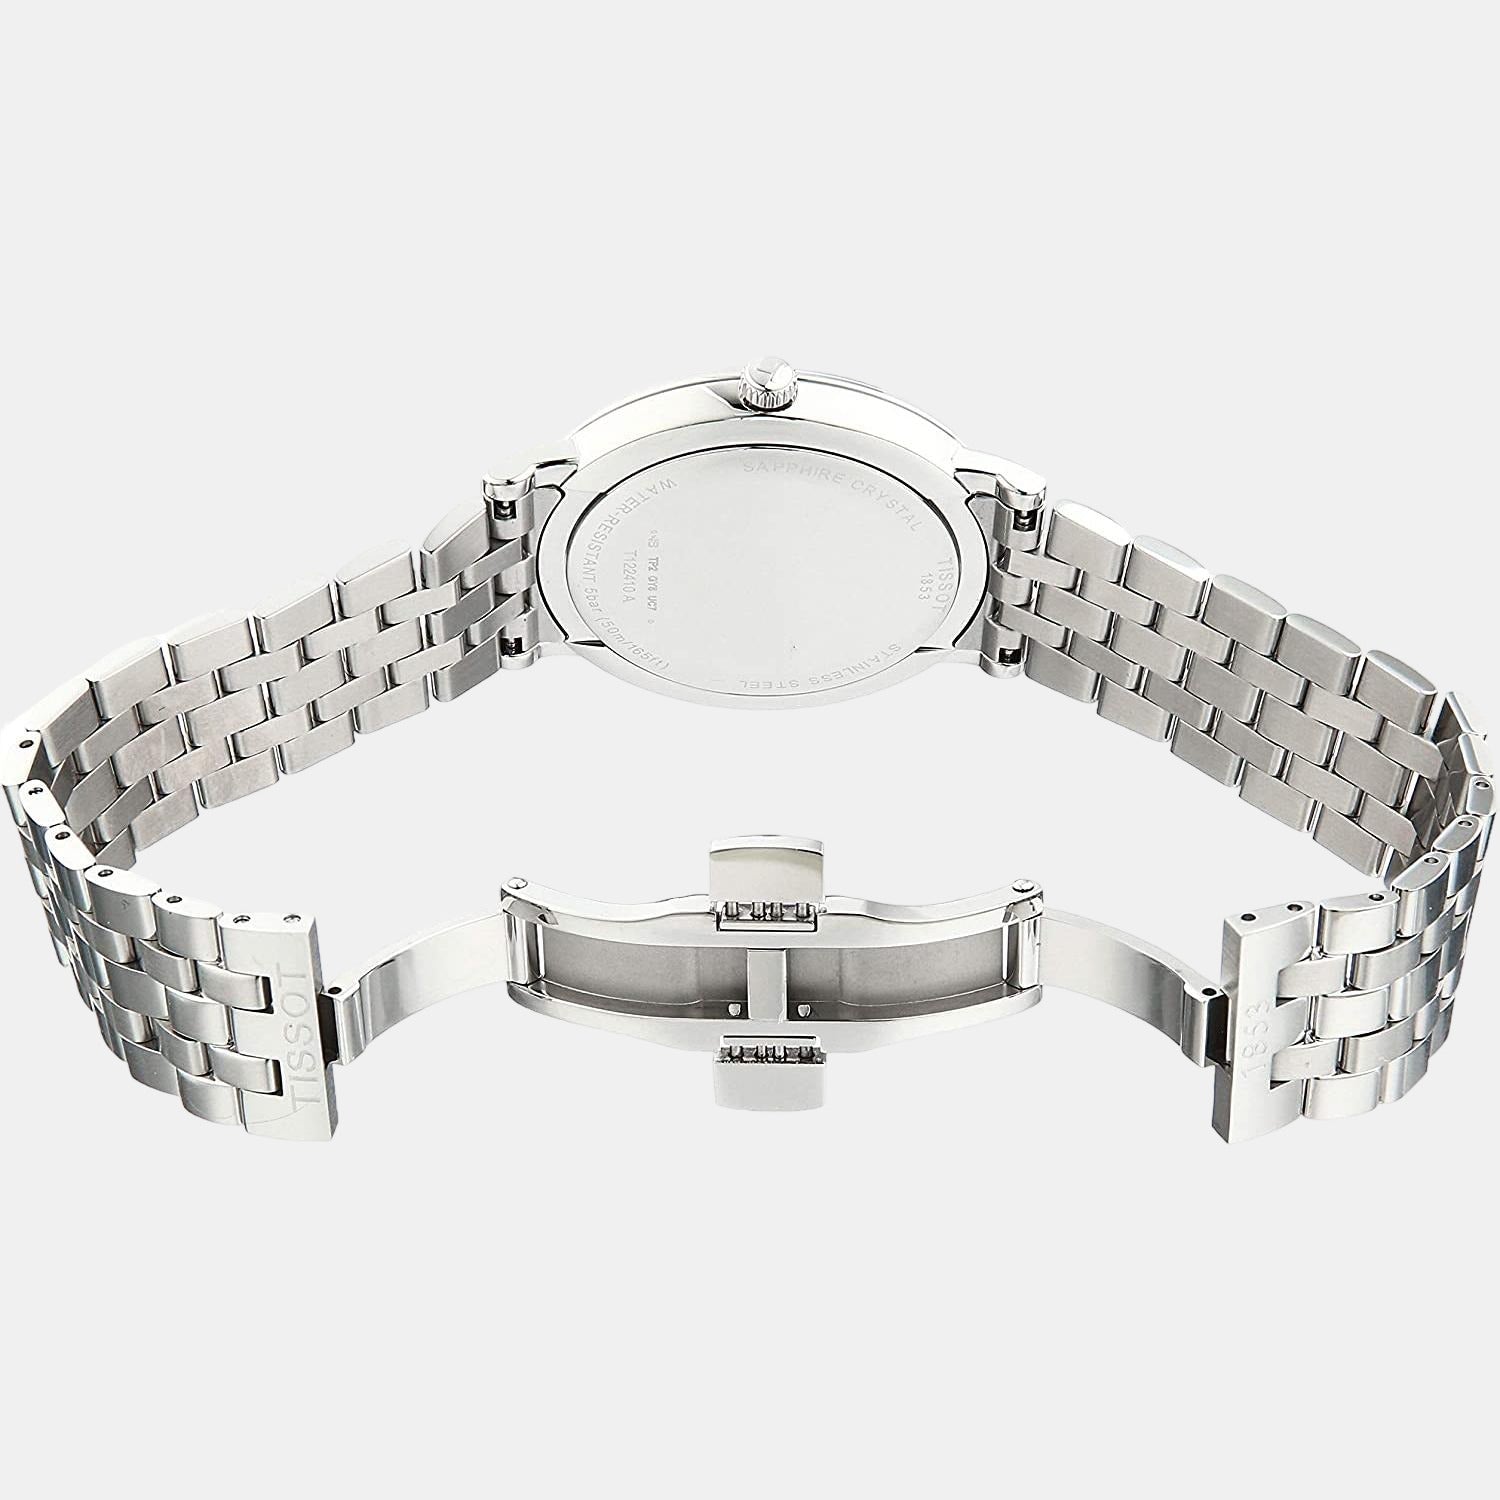 tissot-stainless-steel-grey-analog-unisex-watch-t1224101103300